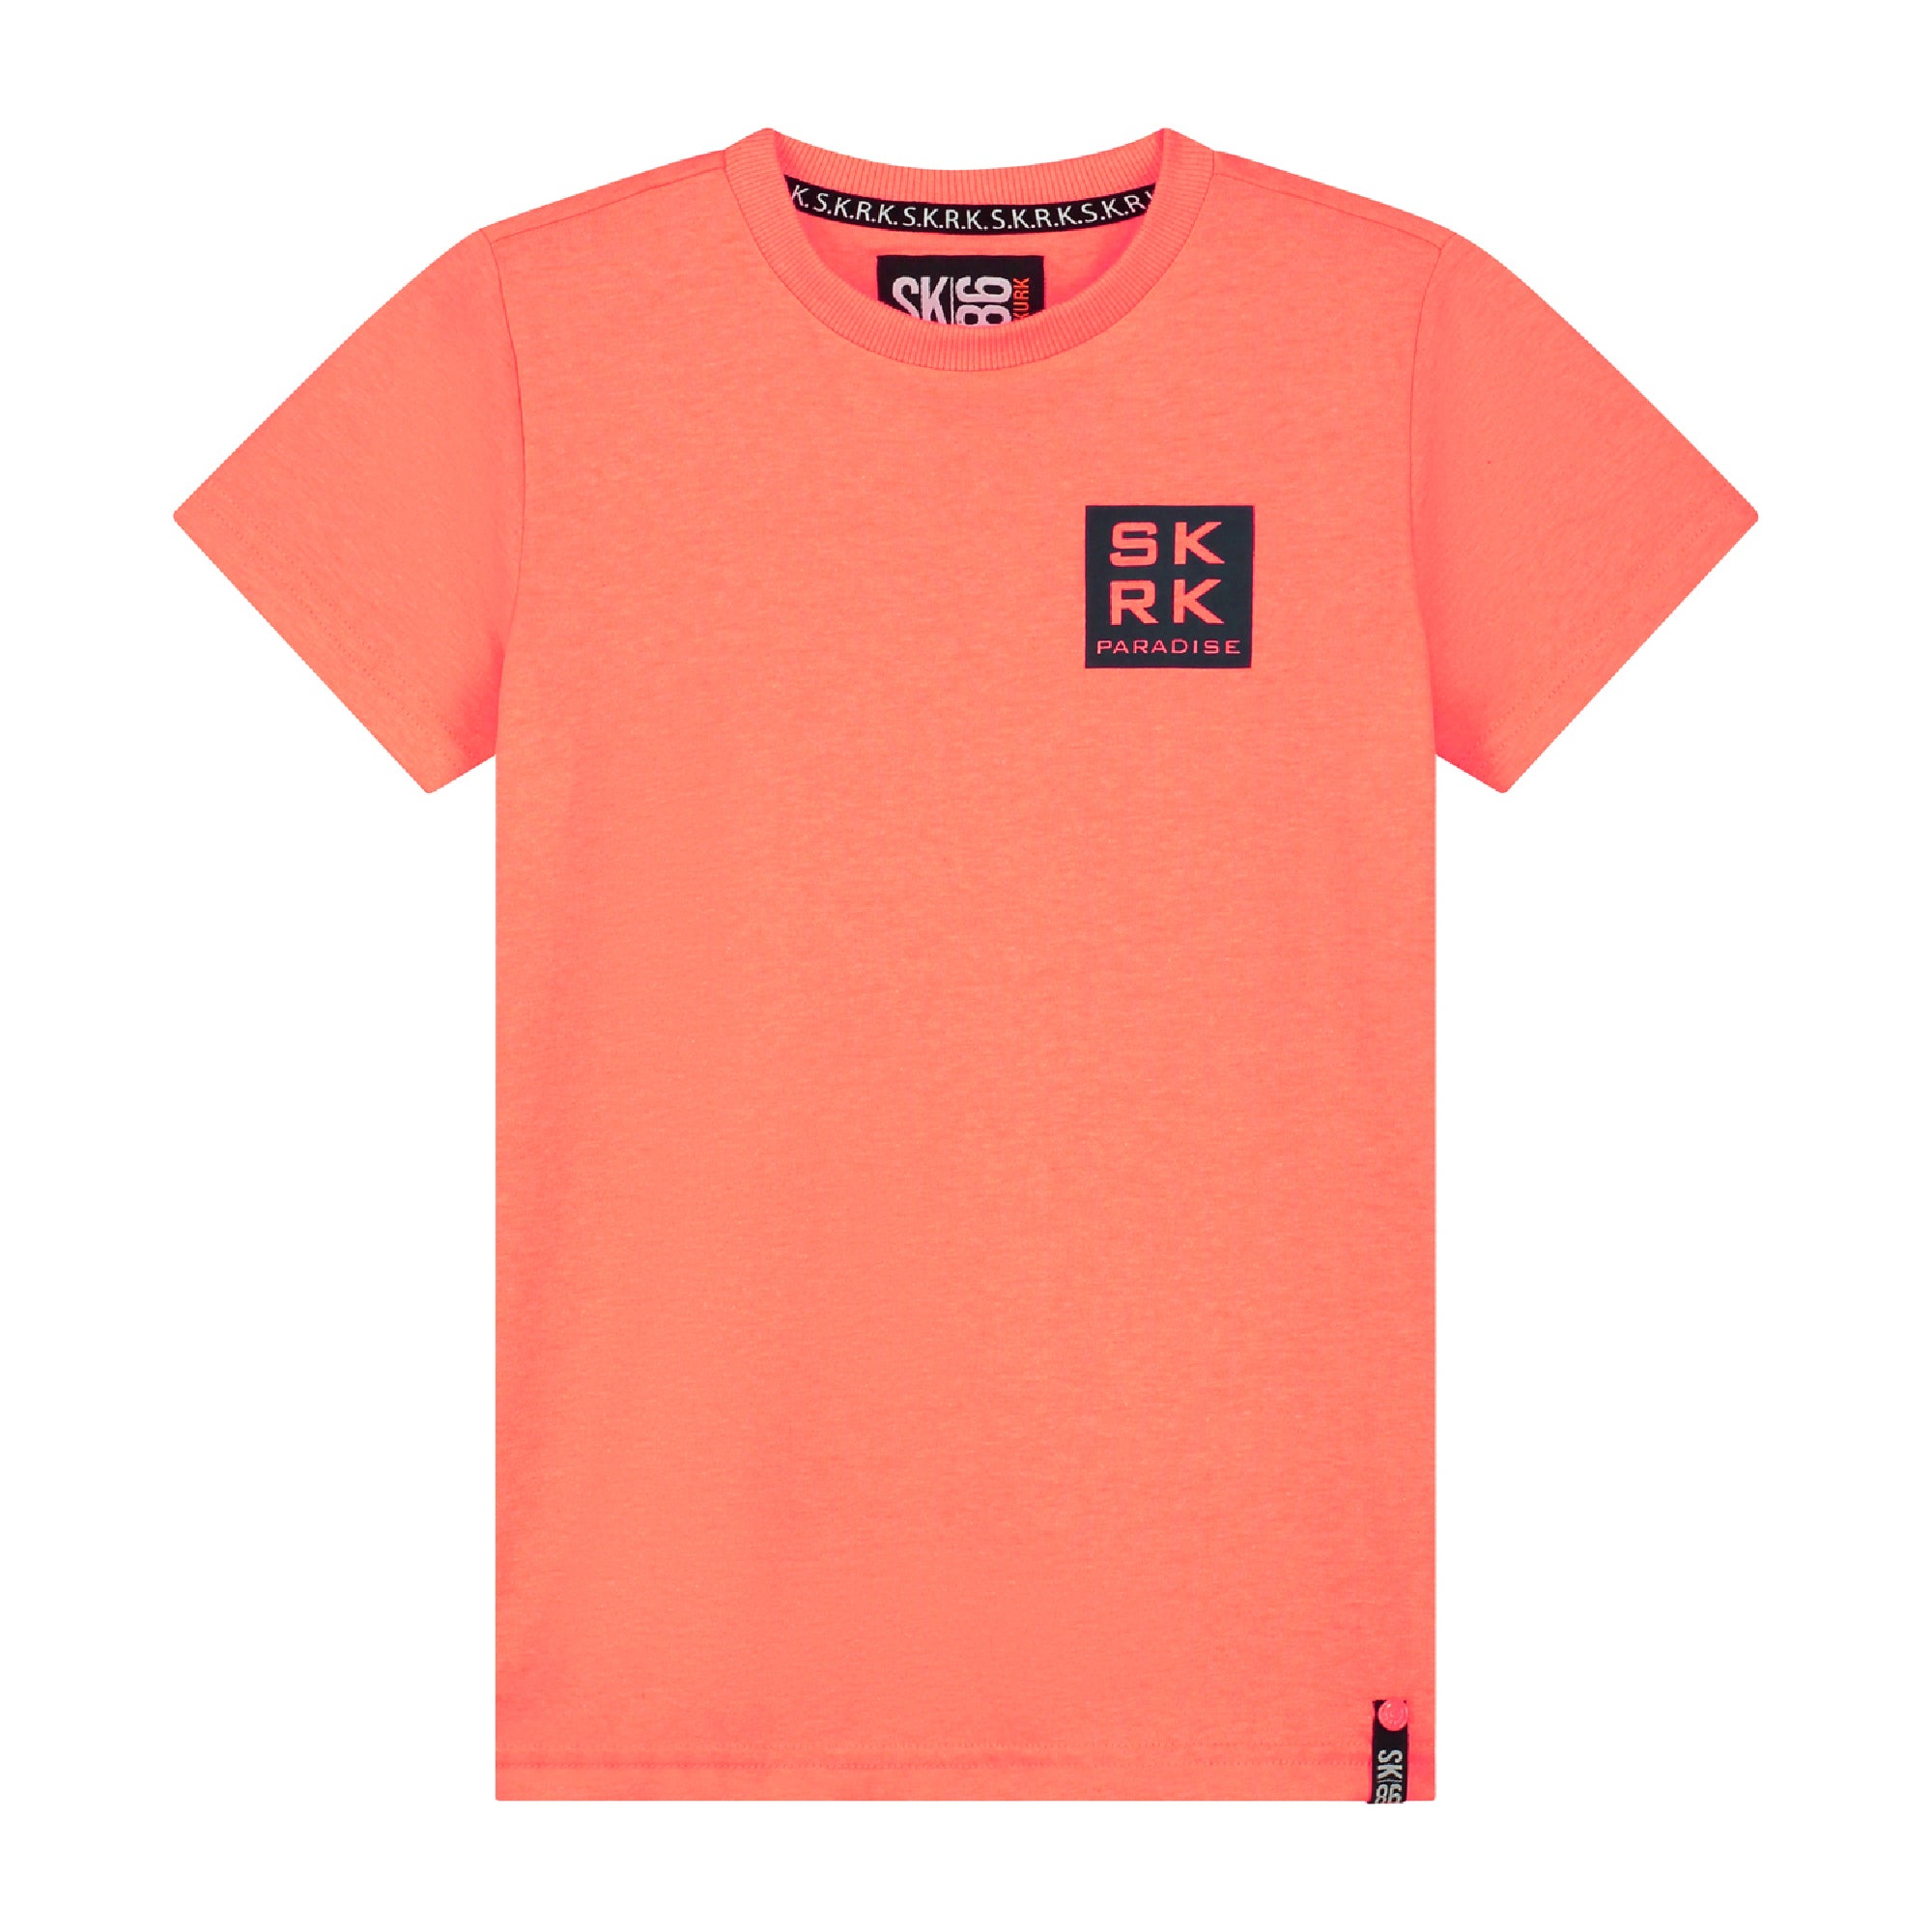 Skurk T-shirt Tiam Coral